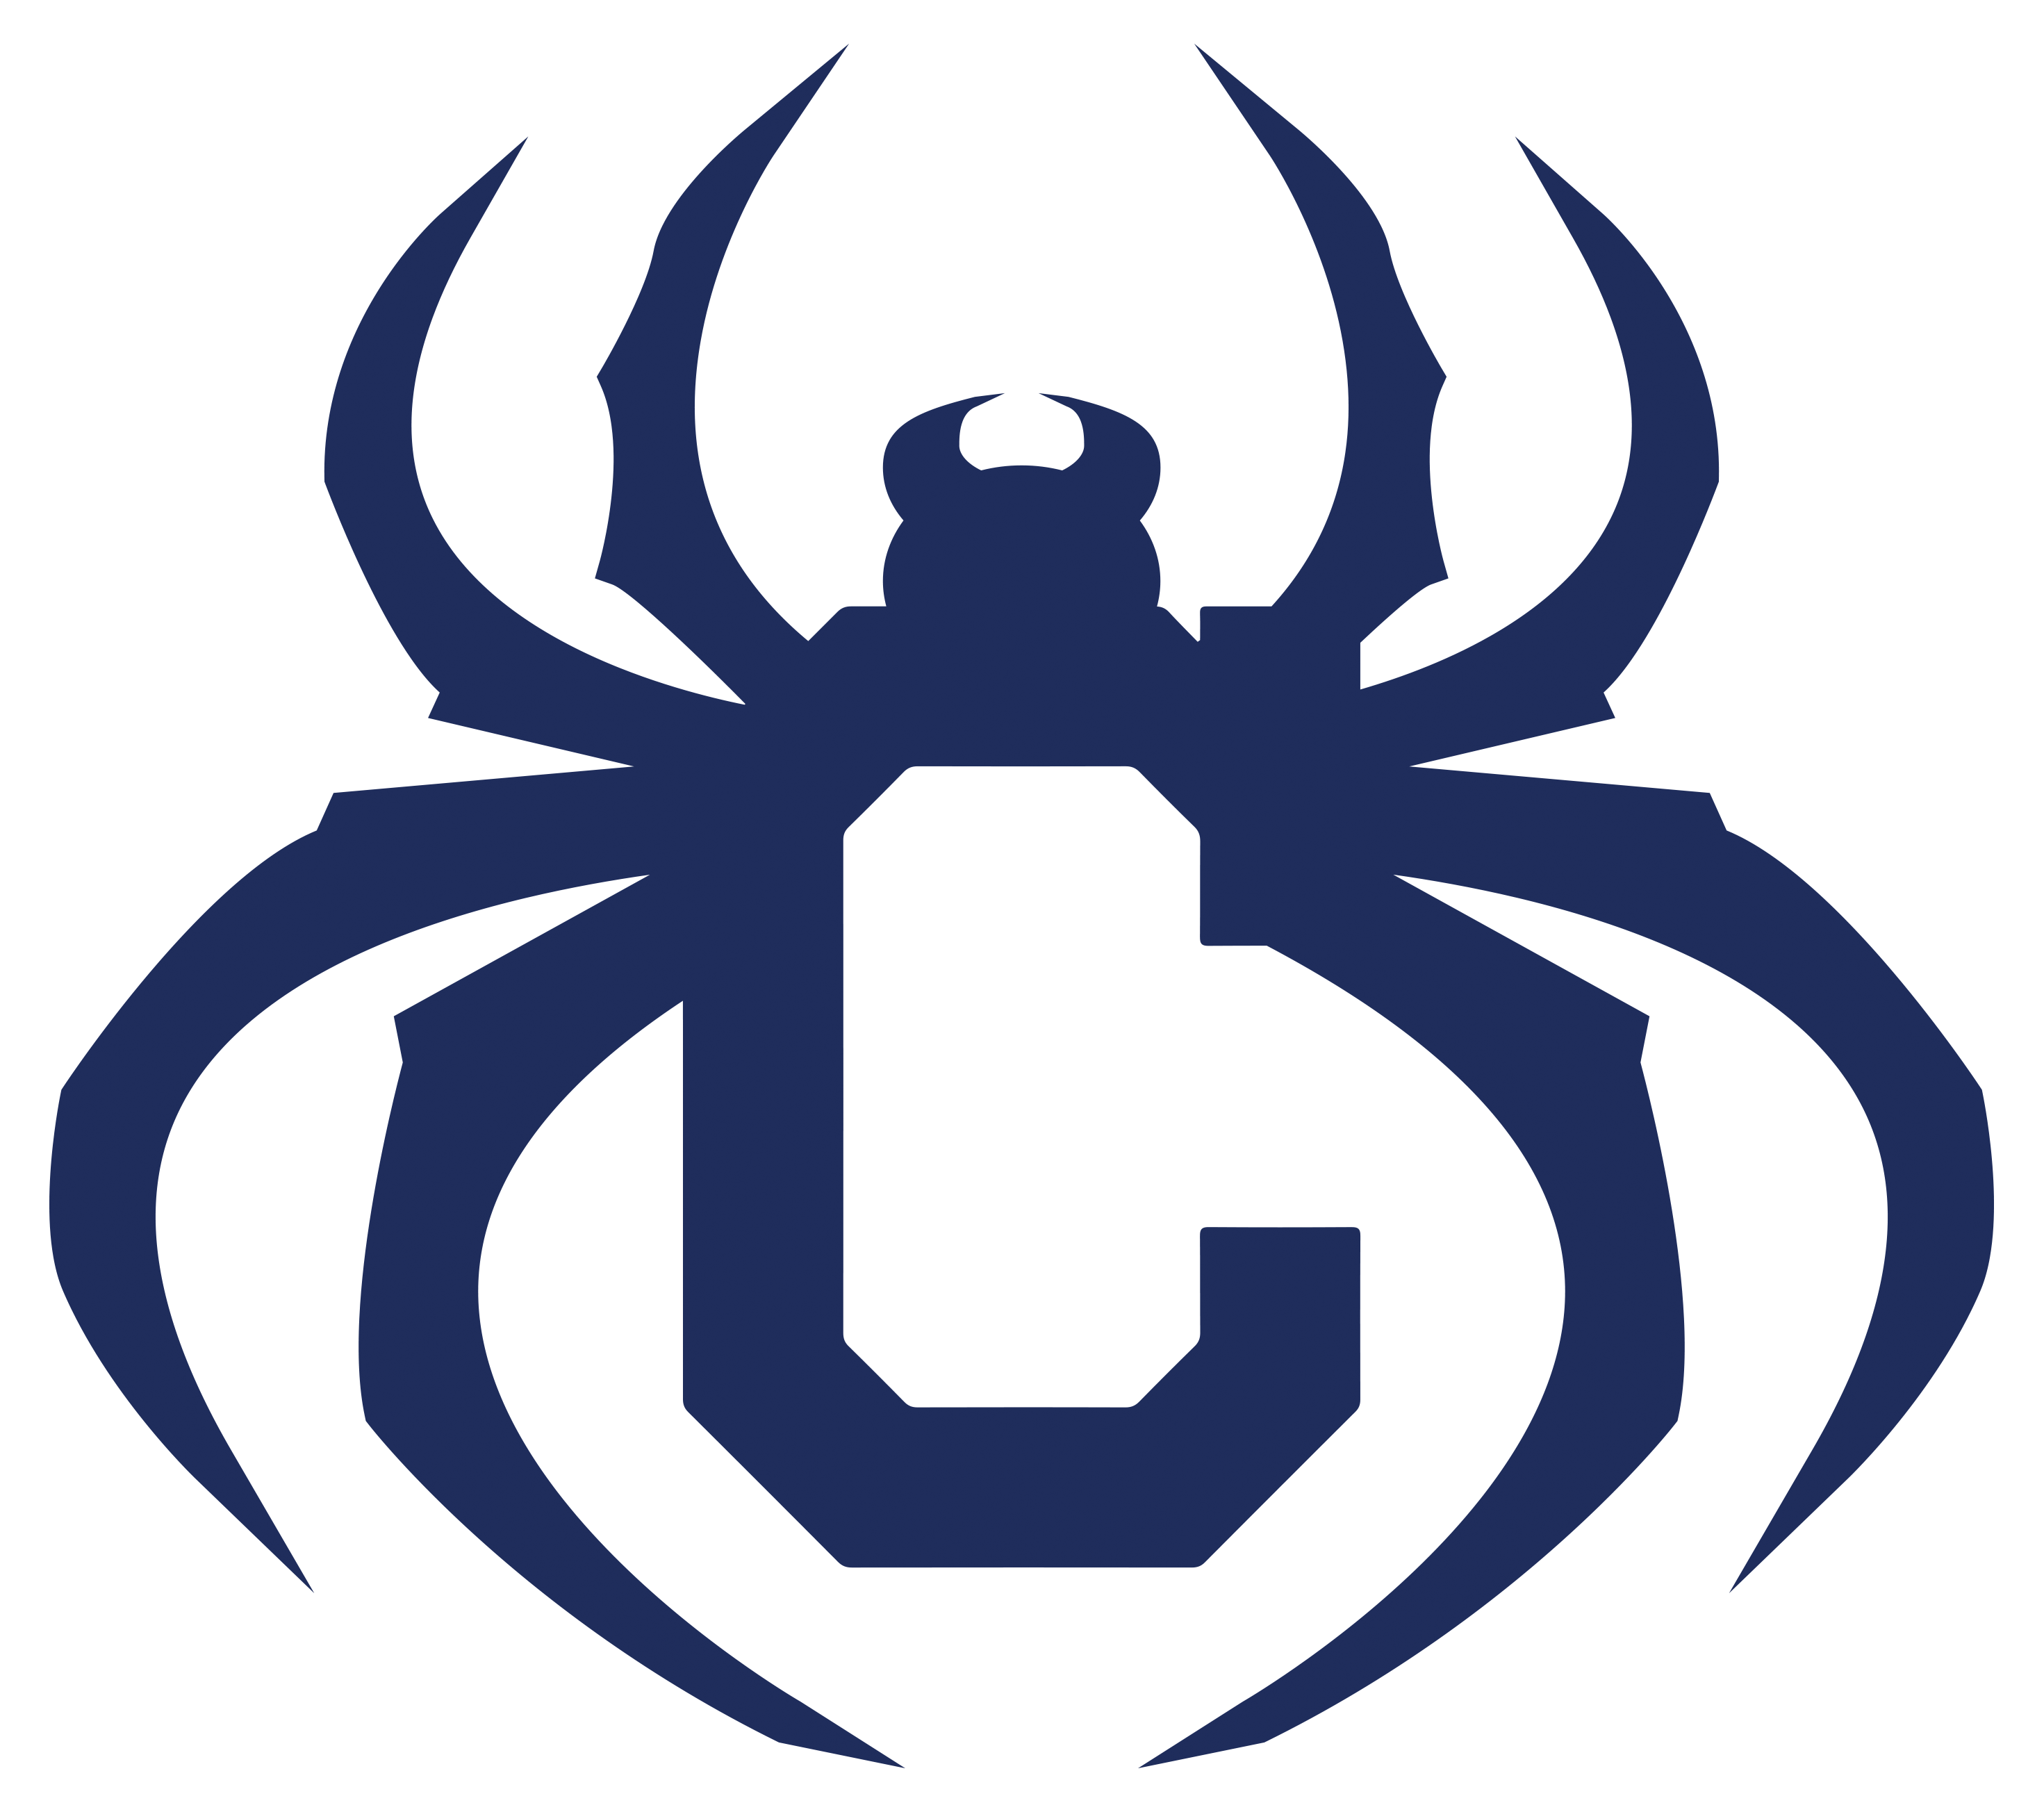 cleveland spiders uniform